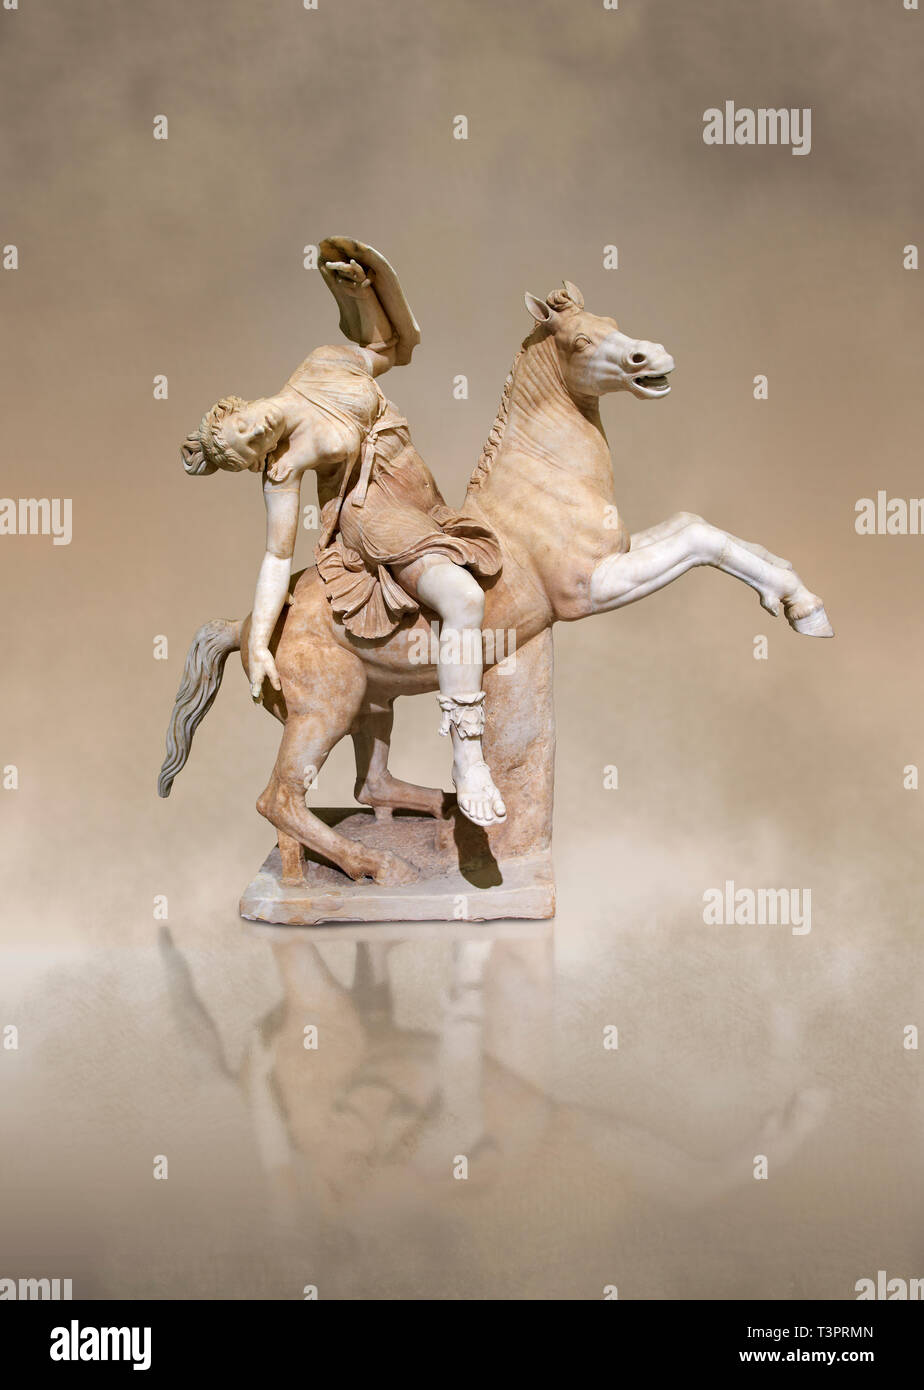 Statue of amazon -Fotos und -Bildmaterial in hoher Auflösung – Alamy